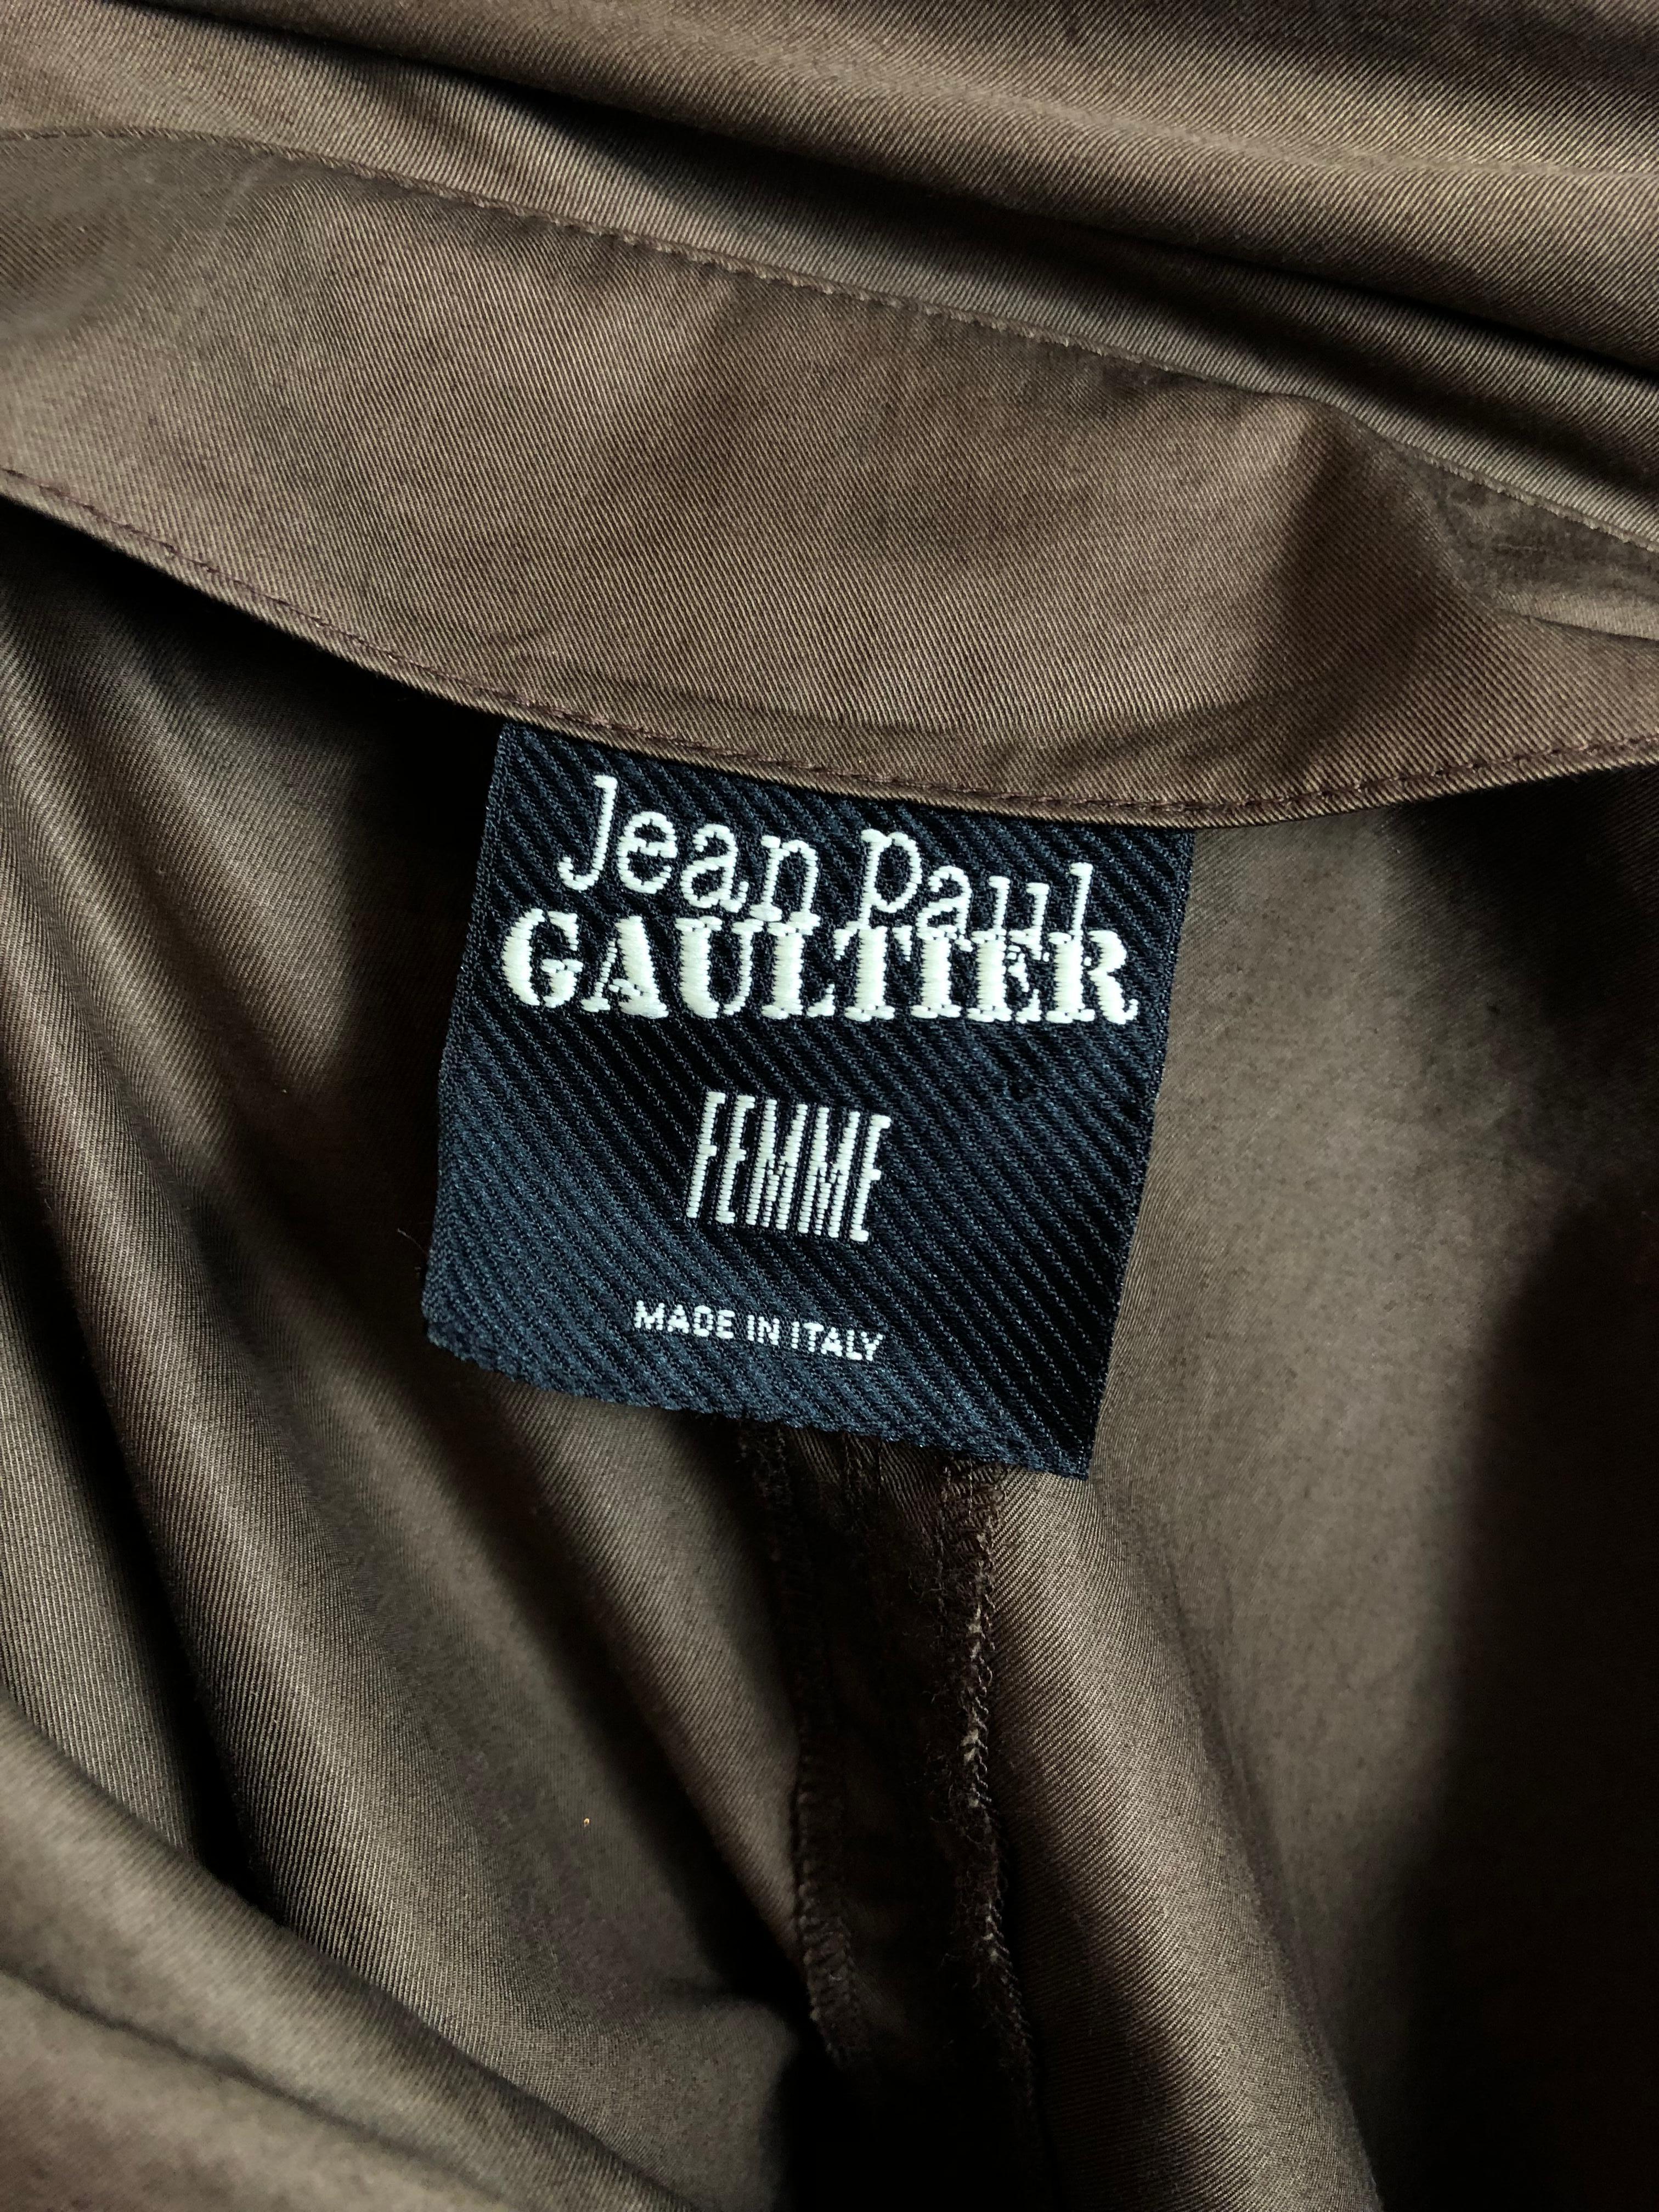 Jean Paul Gaultier 90s bows shirt 1